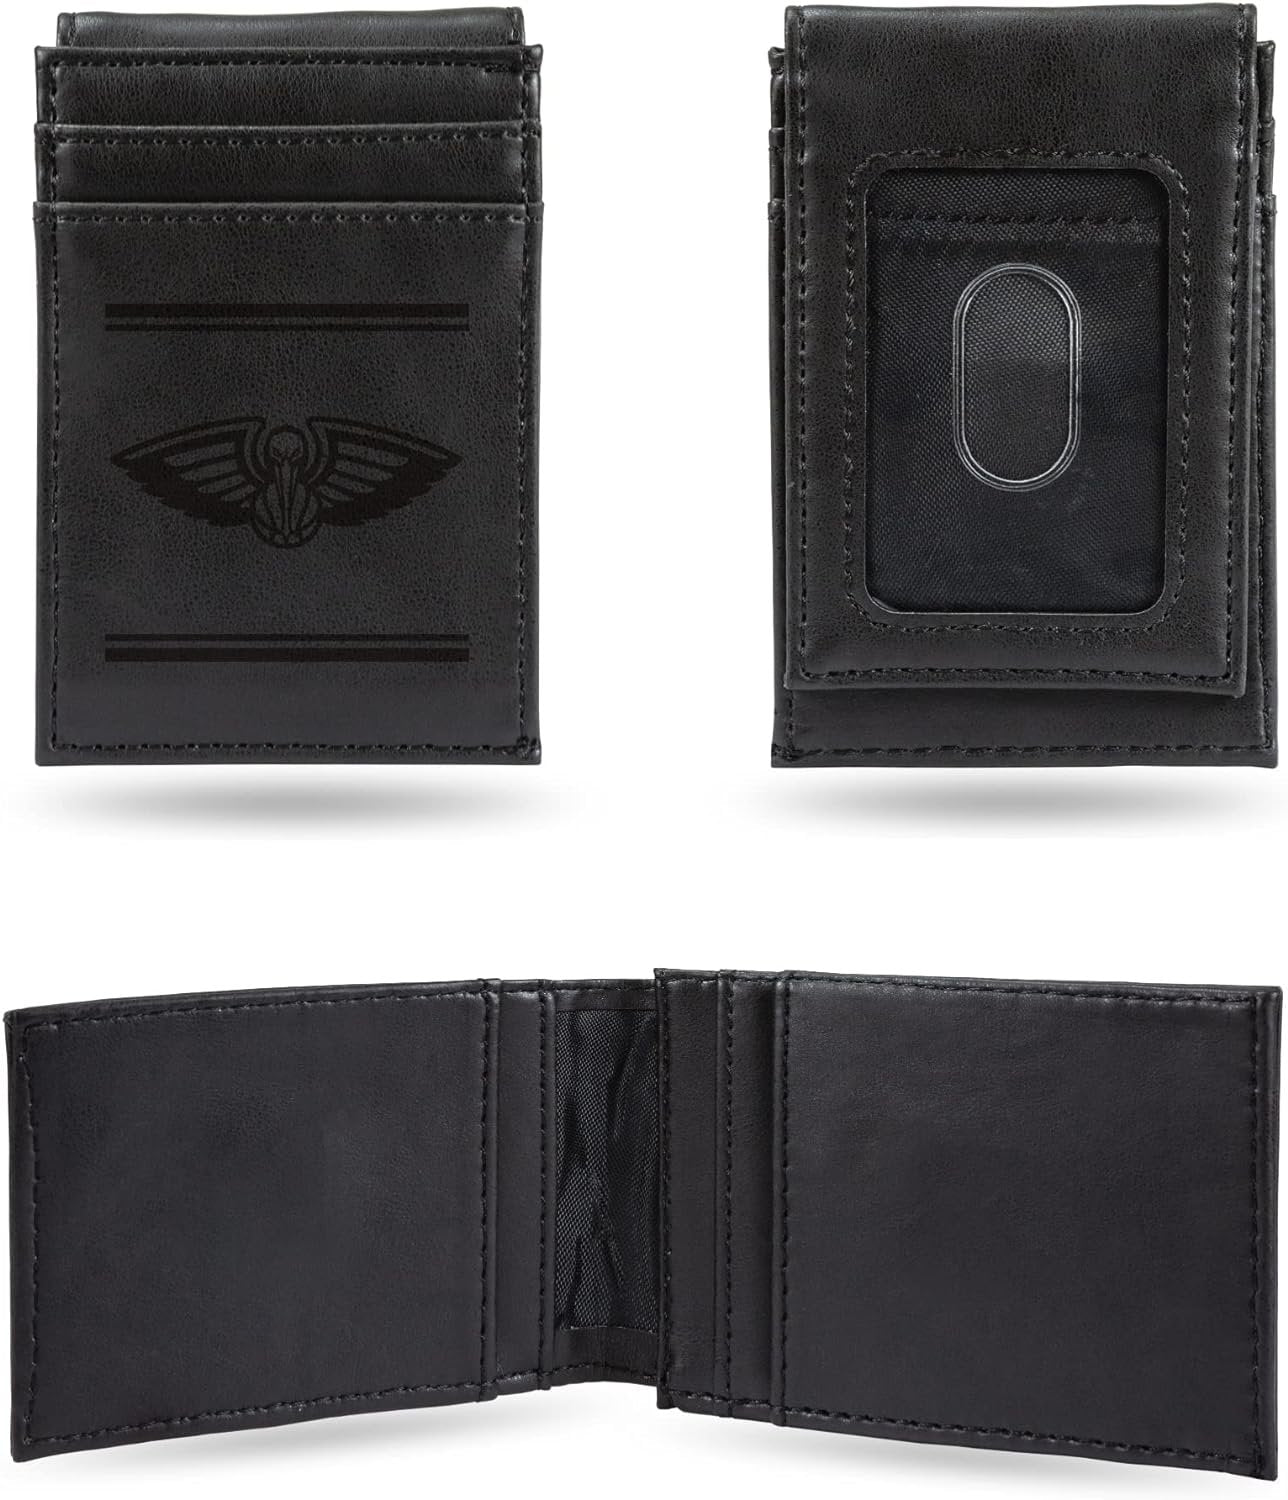 New Orleans Pelicans Premium Black Leather Wallet, Front Pocket Magnetic Money Clip, Laser Engraved, Vegan